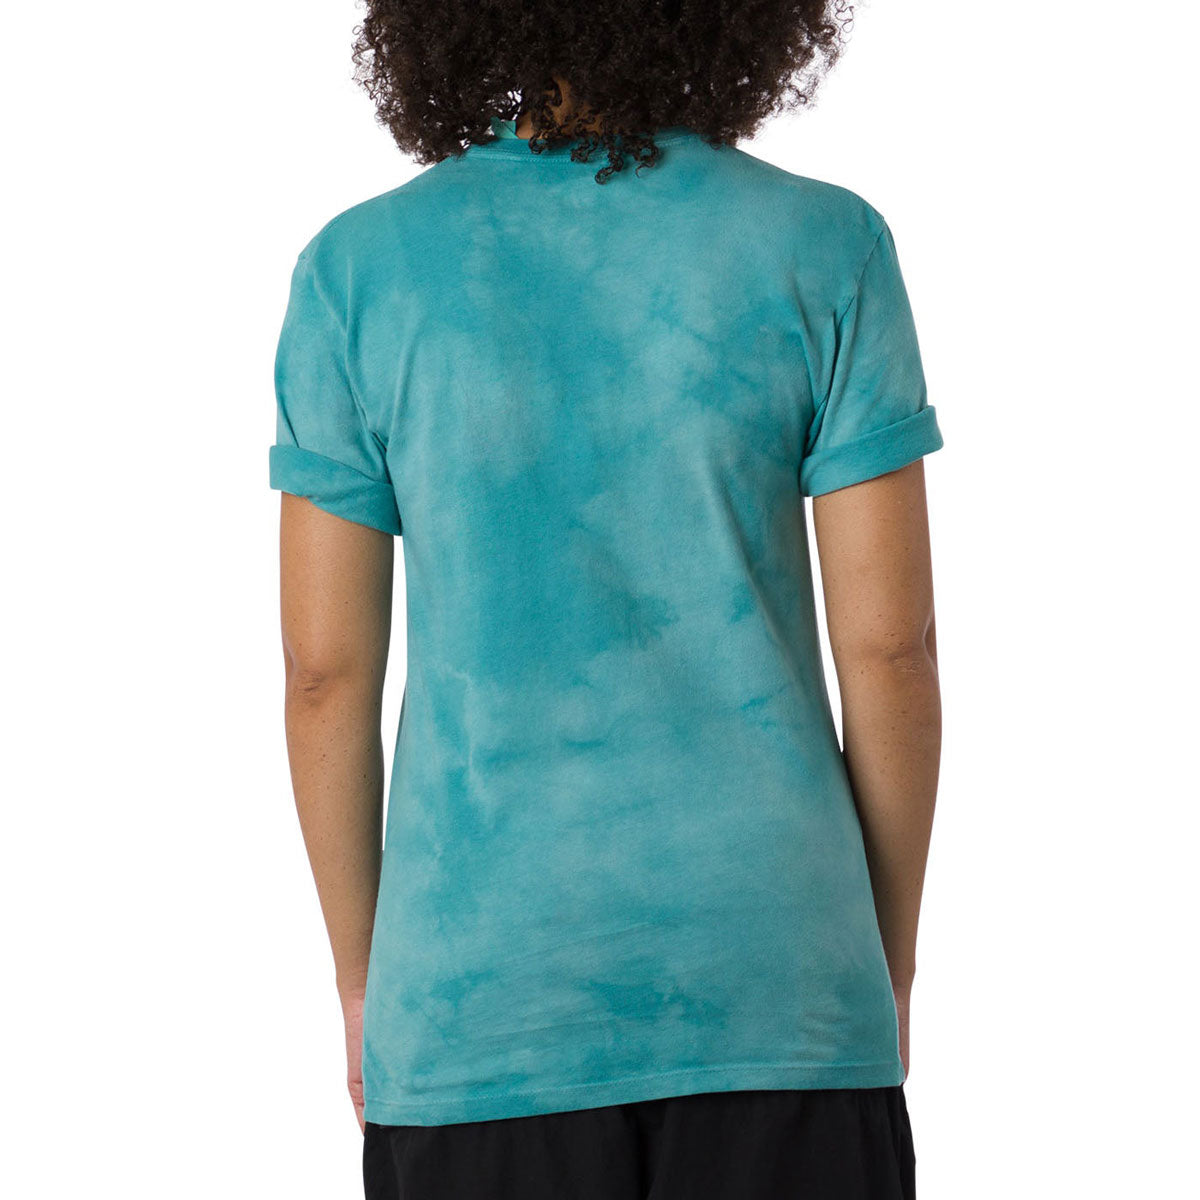 Santa Cruz Womens Asp Flores Dot Relaxed Crew T-Shirt - Jaded Blue Cloud Wash image 2